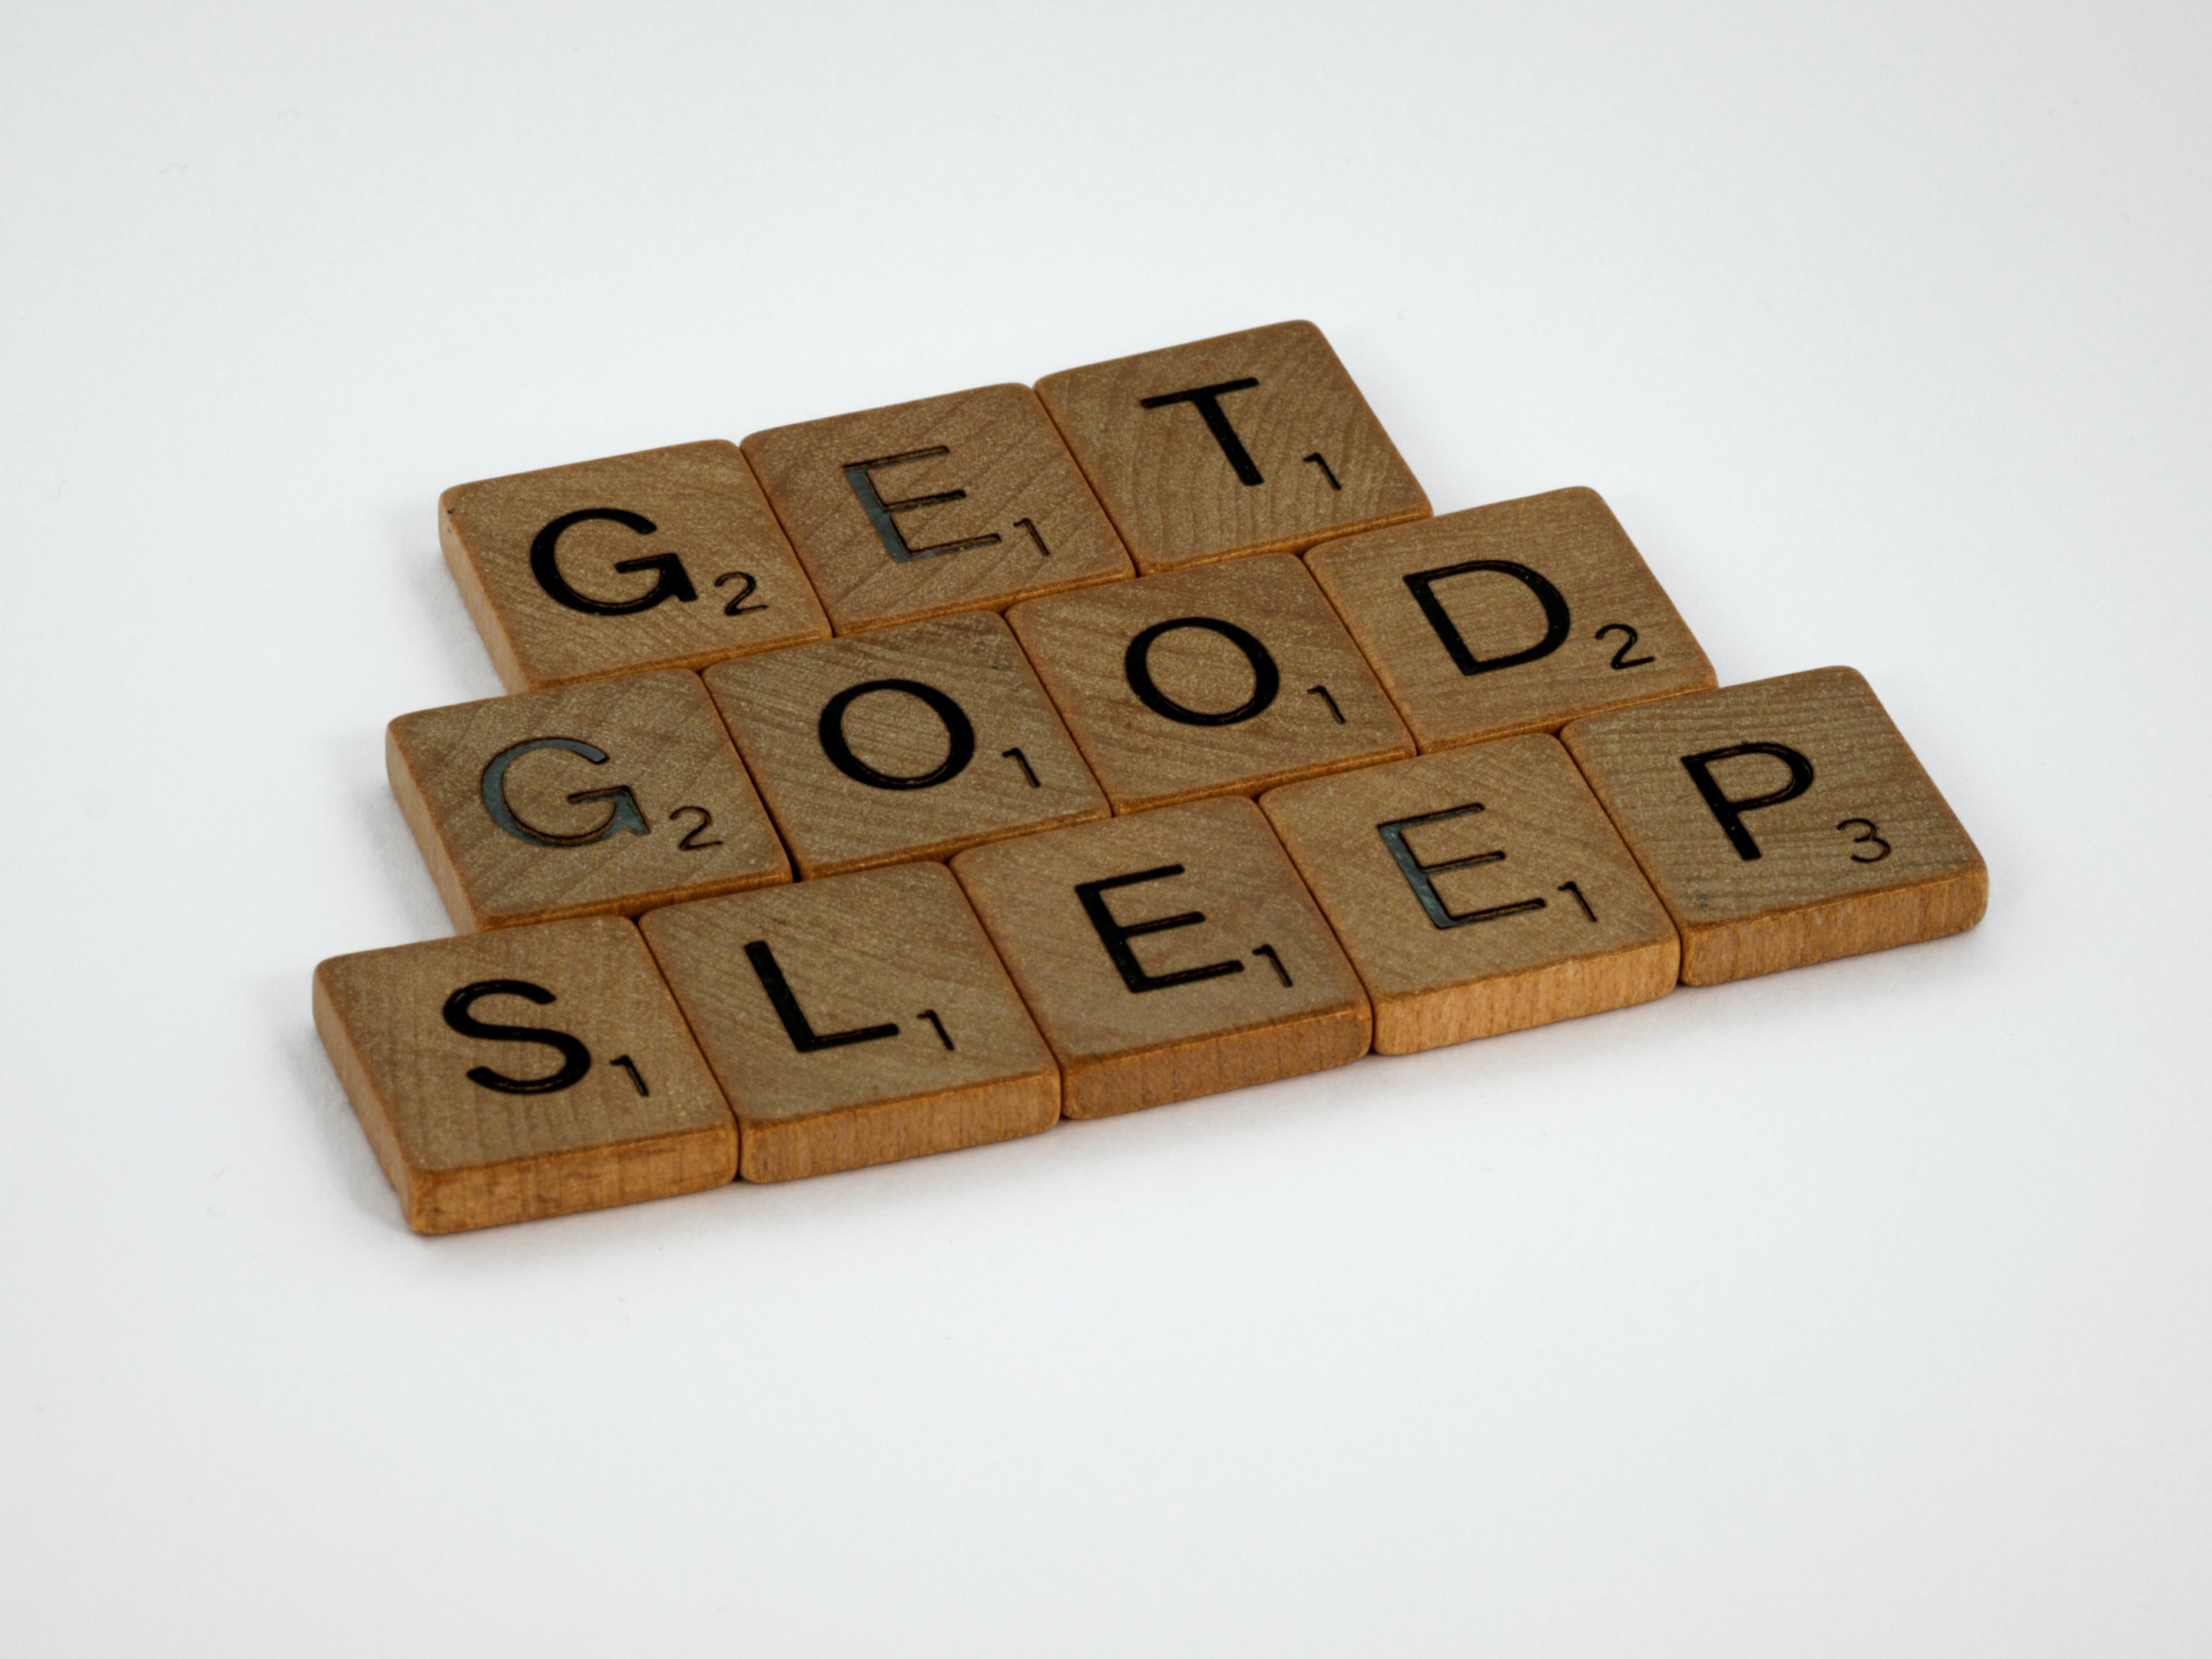 How to get better sleep 